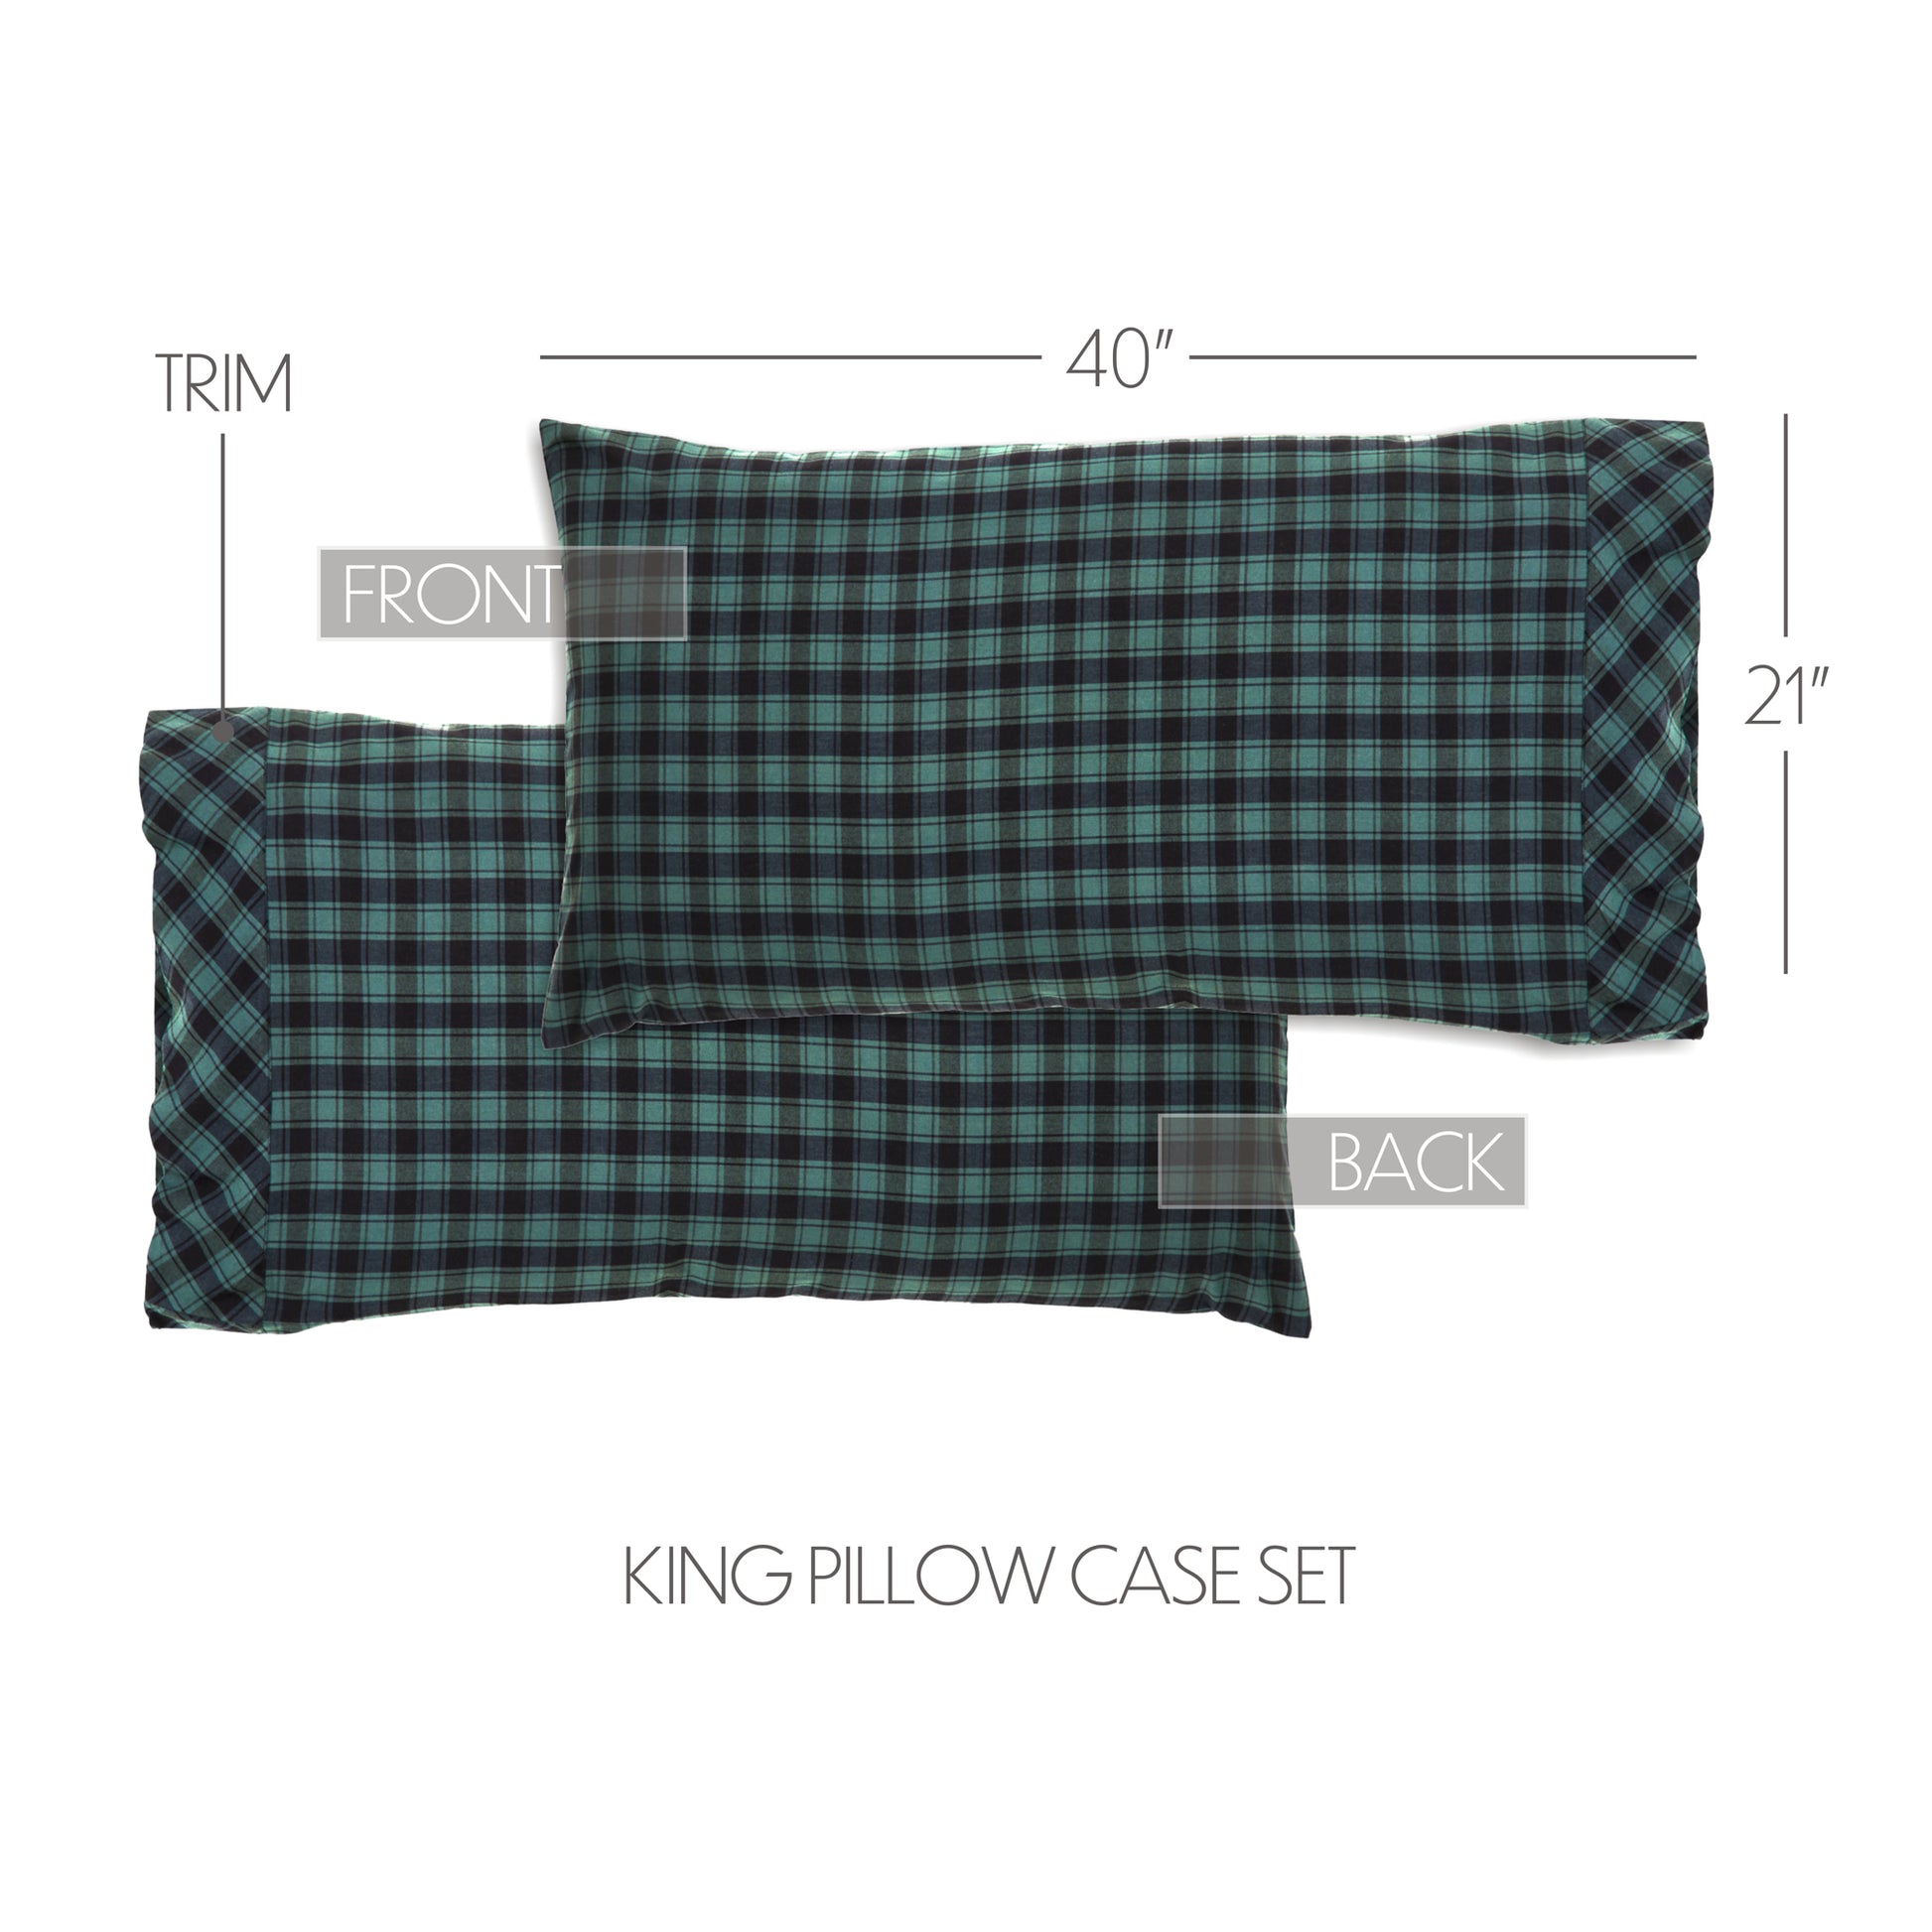 80393-Pine-Grove-King-Pillow-Case-Set-of-2-21x40-image-2